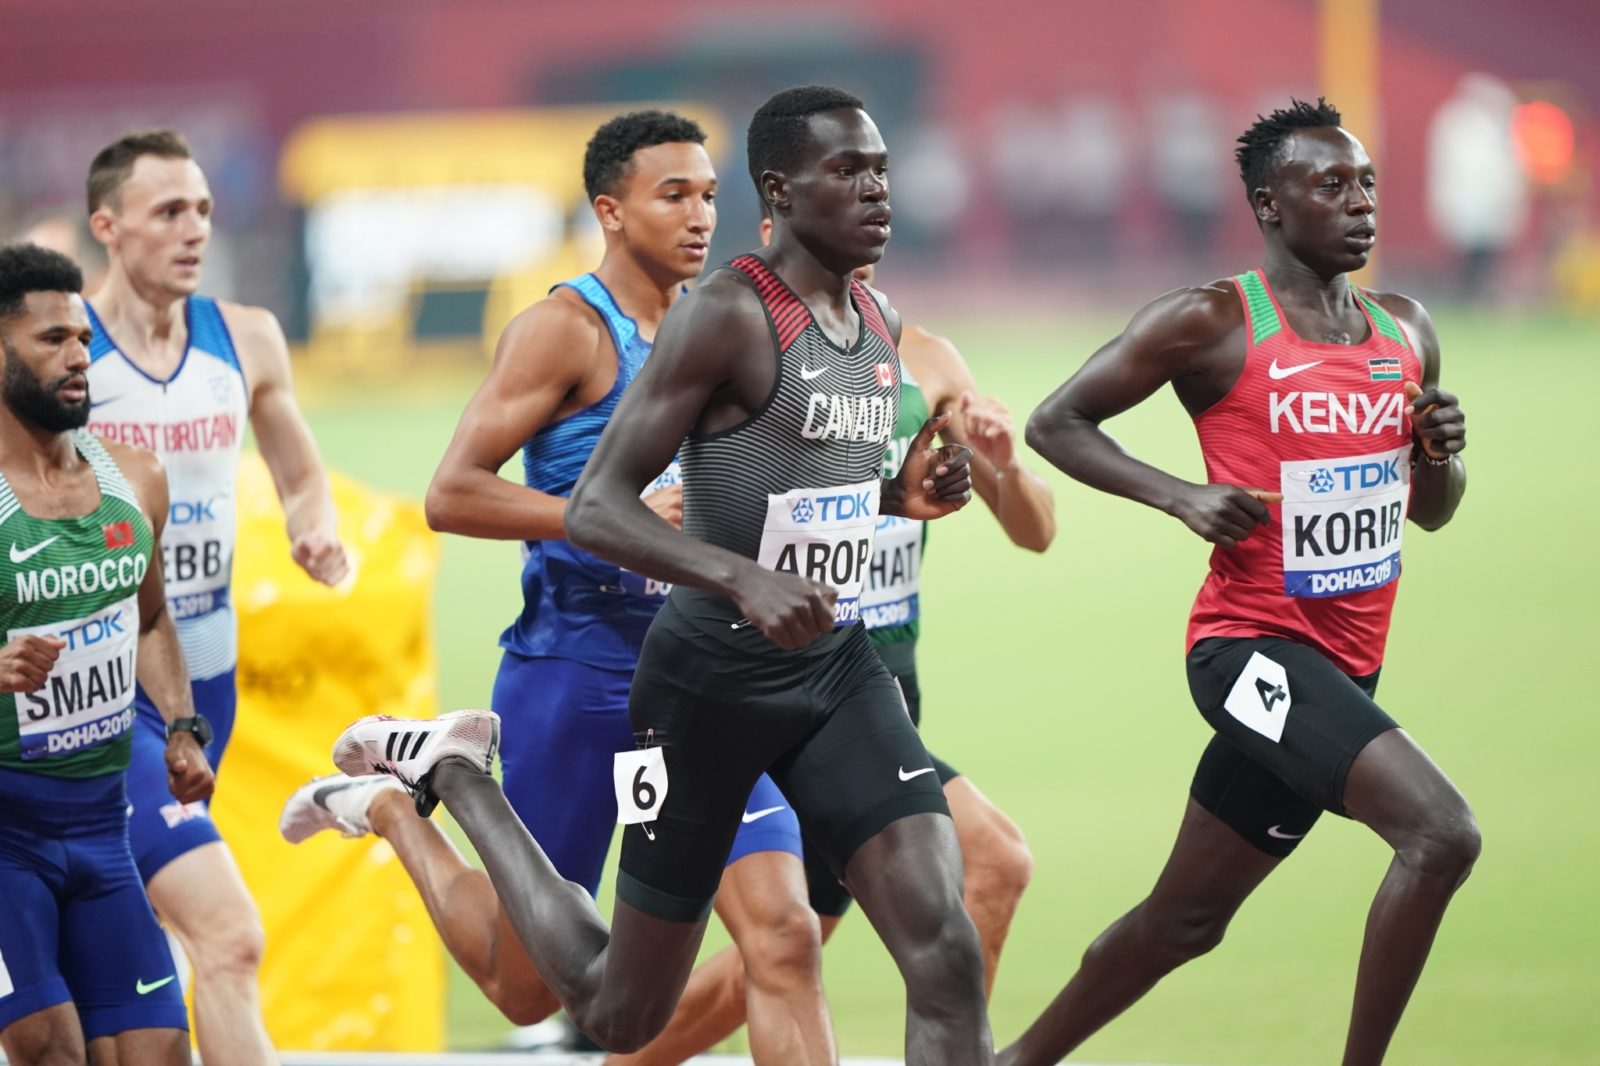 Emmanuel Korir from Kenya in men's 800m in Doha / Photo credit: Getty Images for IAAF